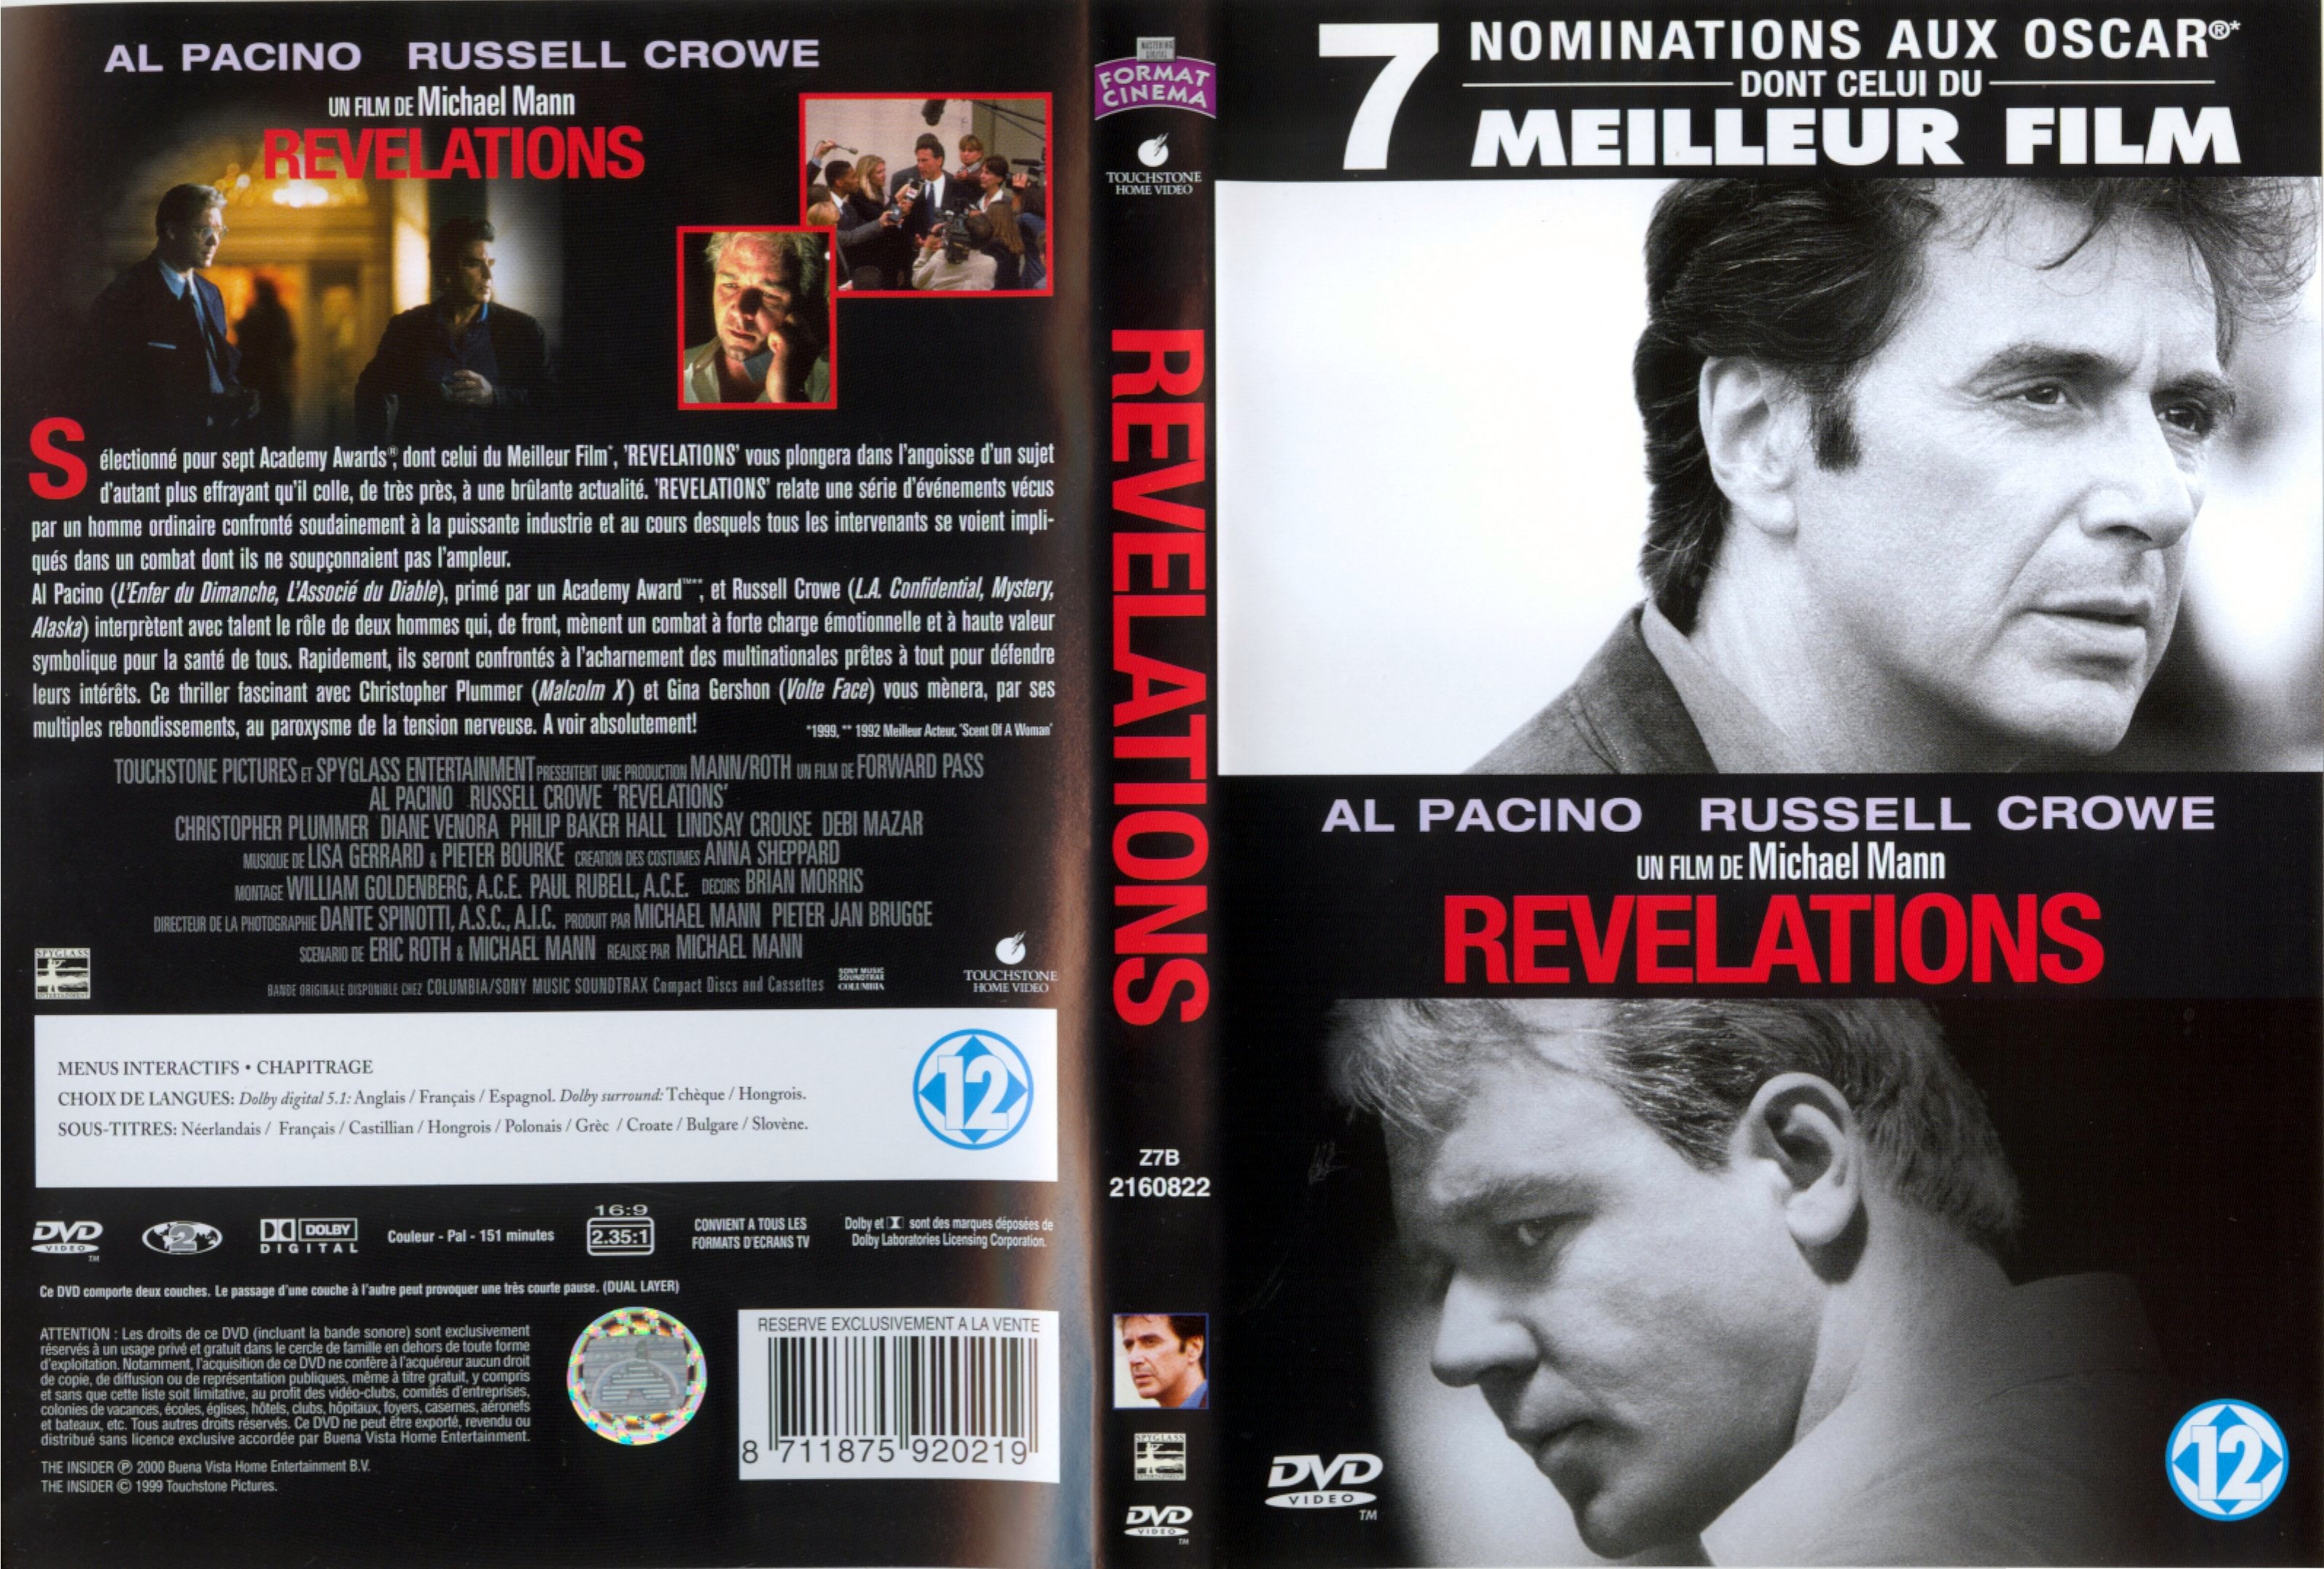 Jaquette DVD Revelations v3